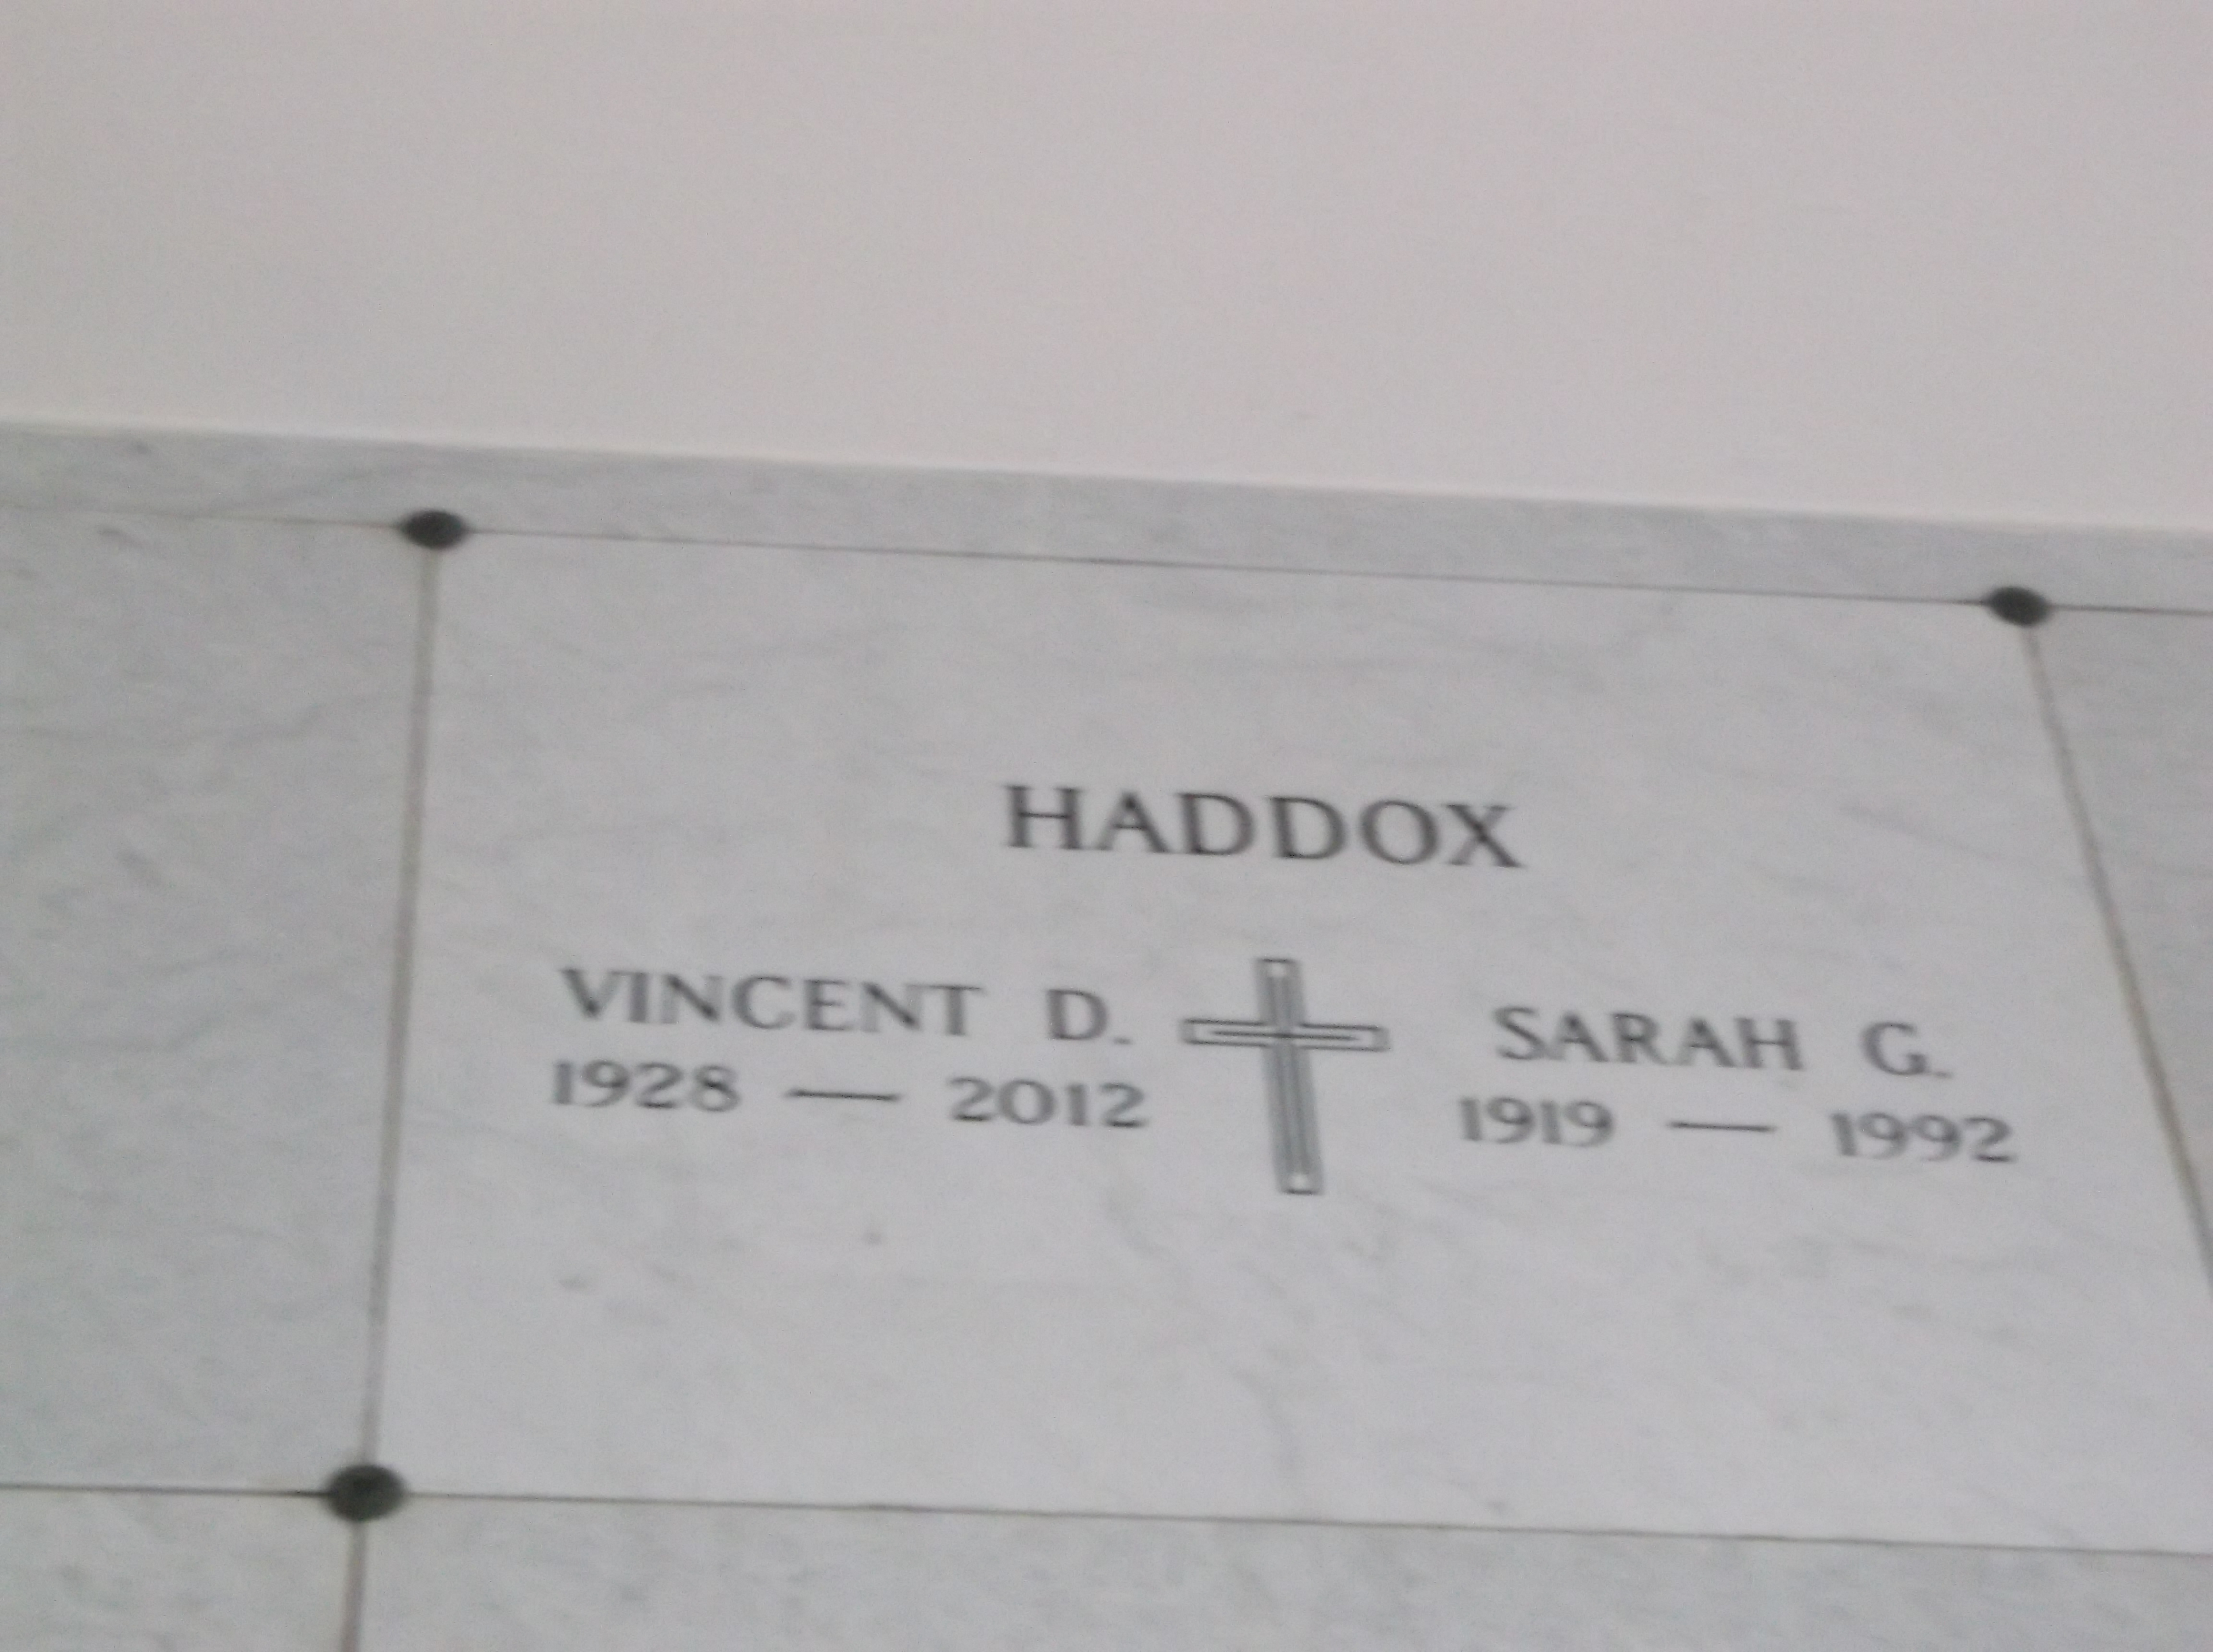 Sarah G Haddox